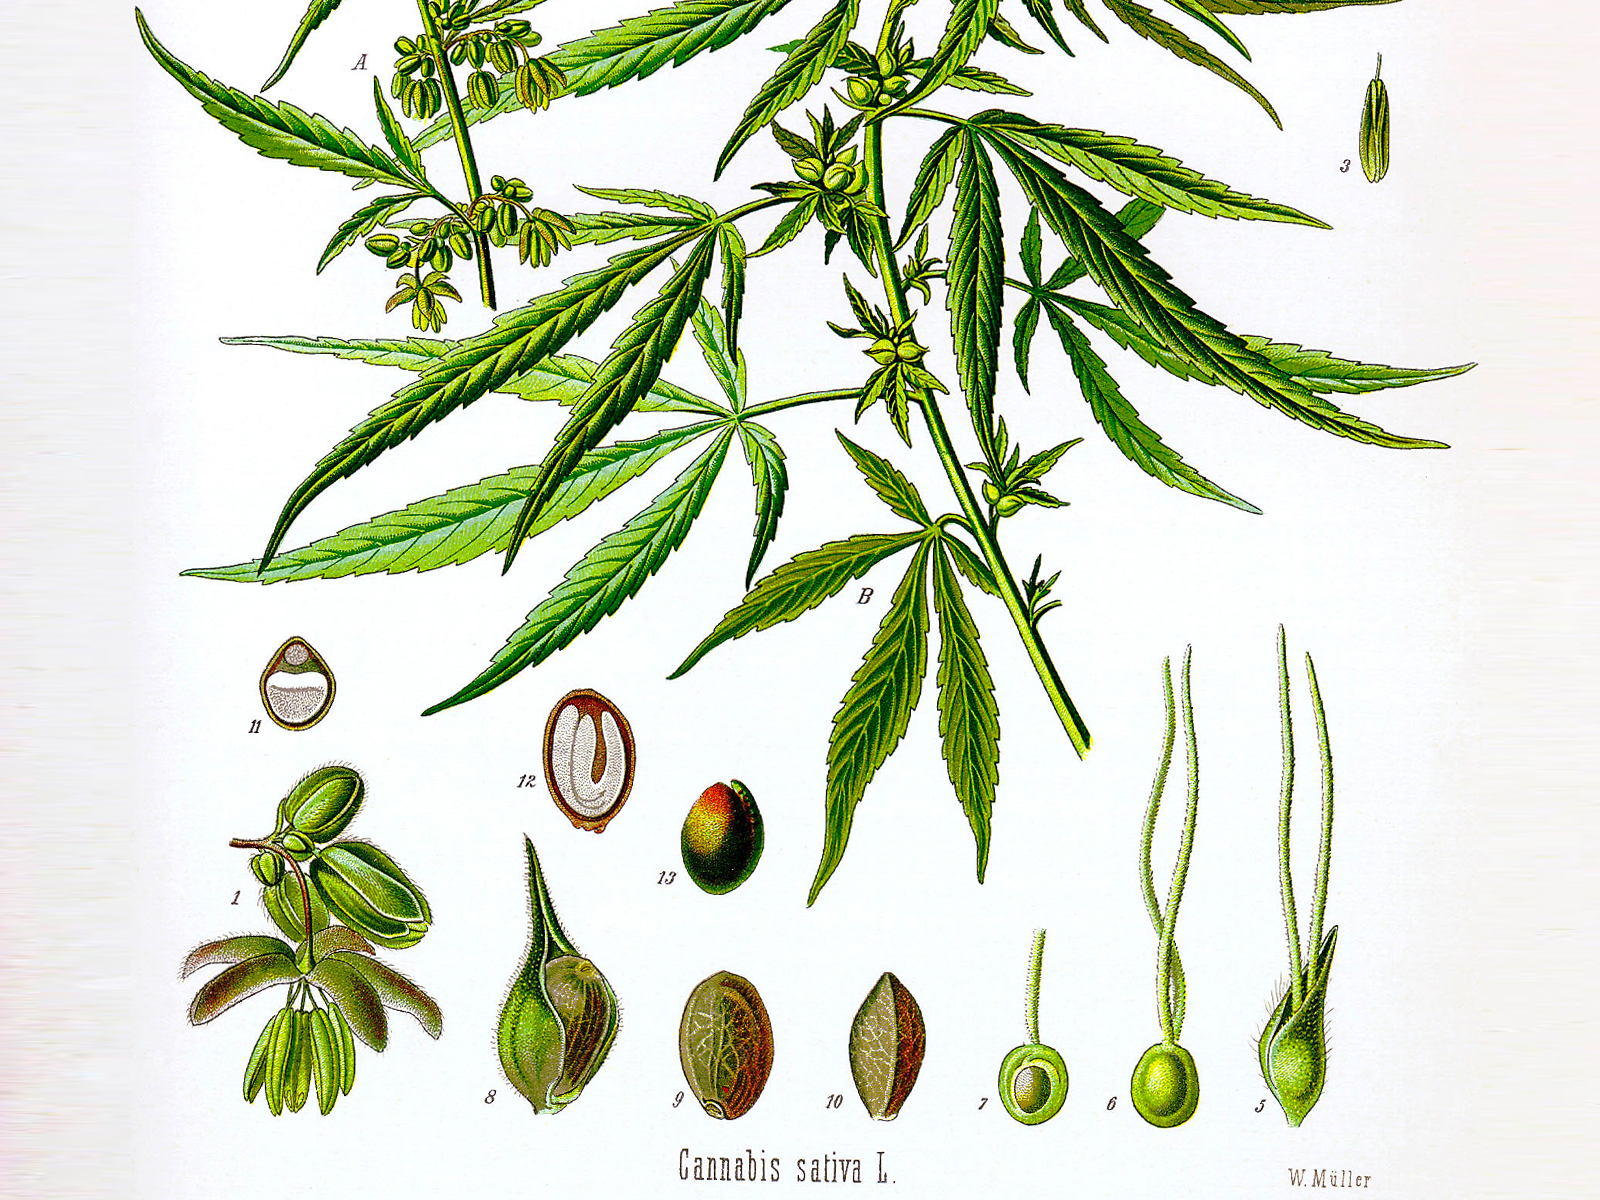 8 Health benefits of cannabis and cannabis edibles 